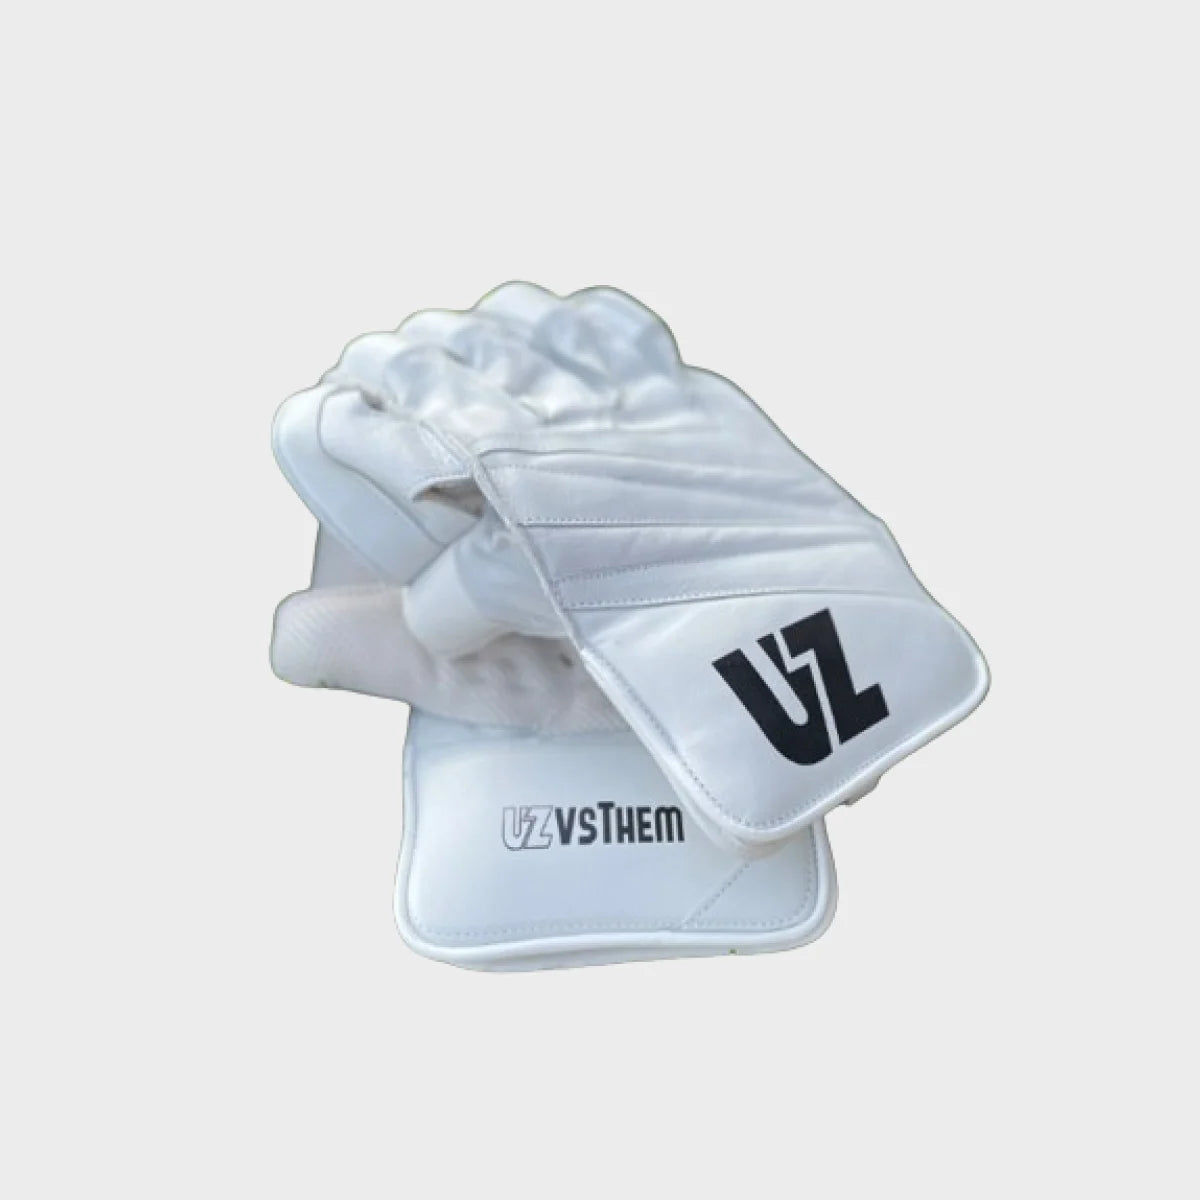 UZ Classic Wicket Keeping Gloves